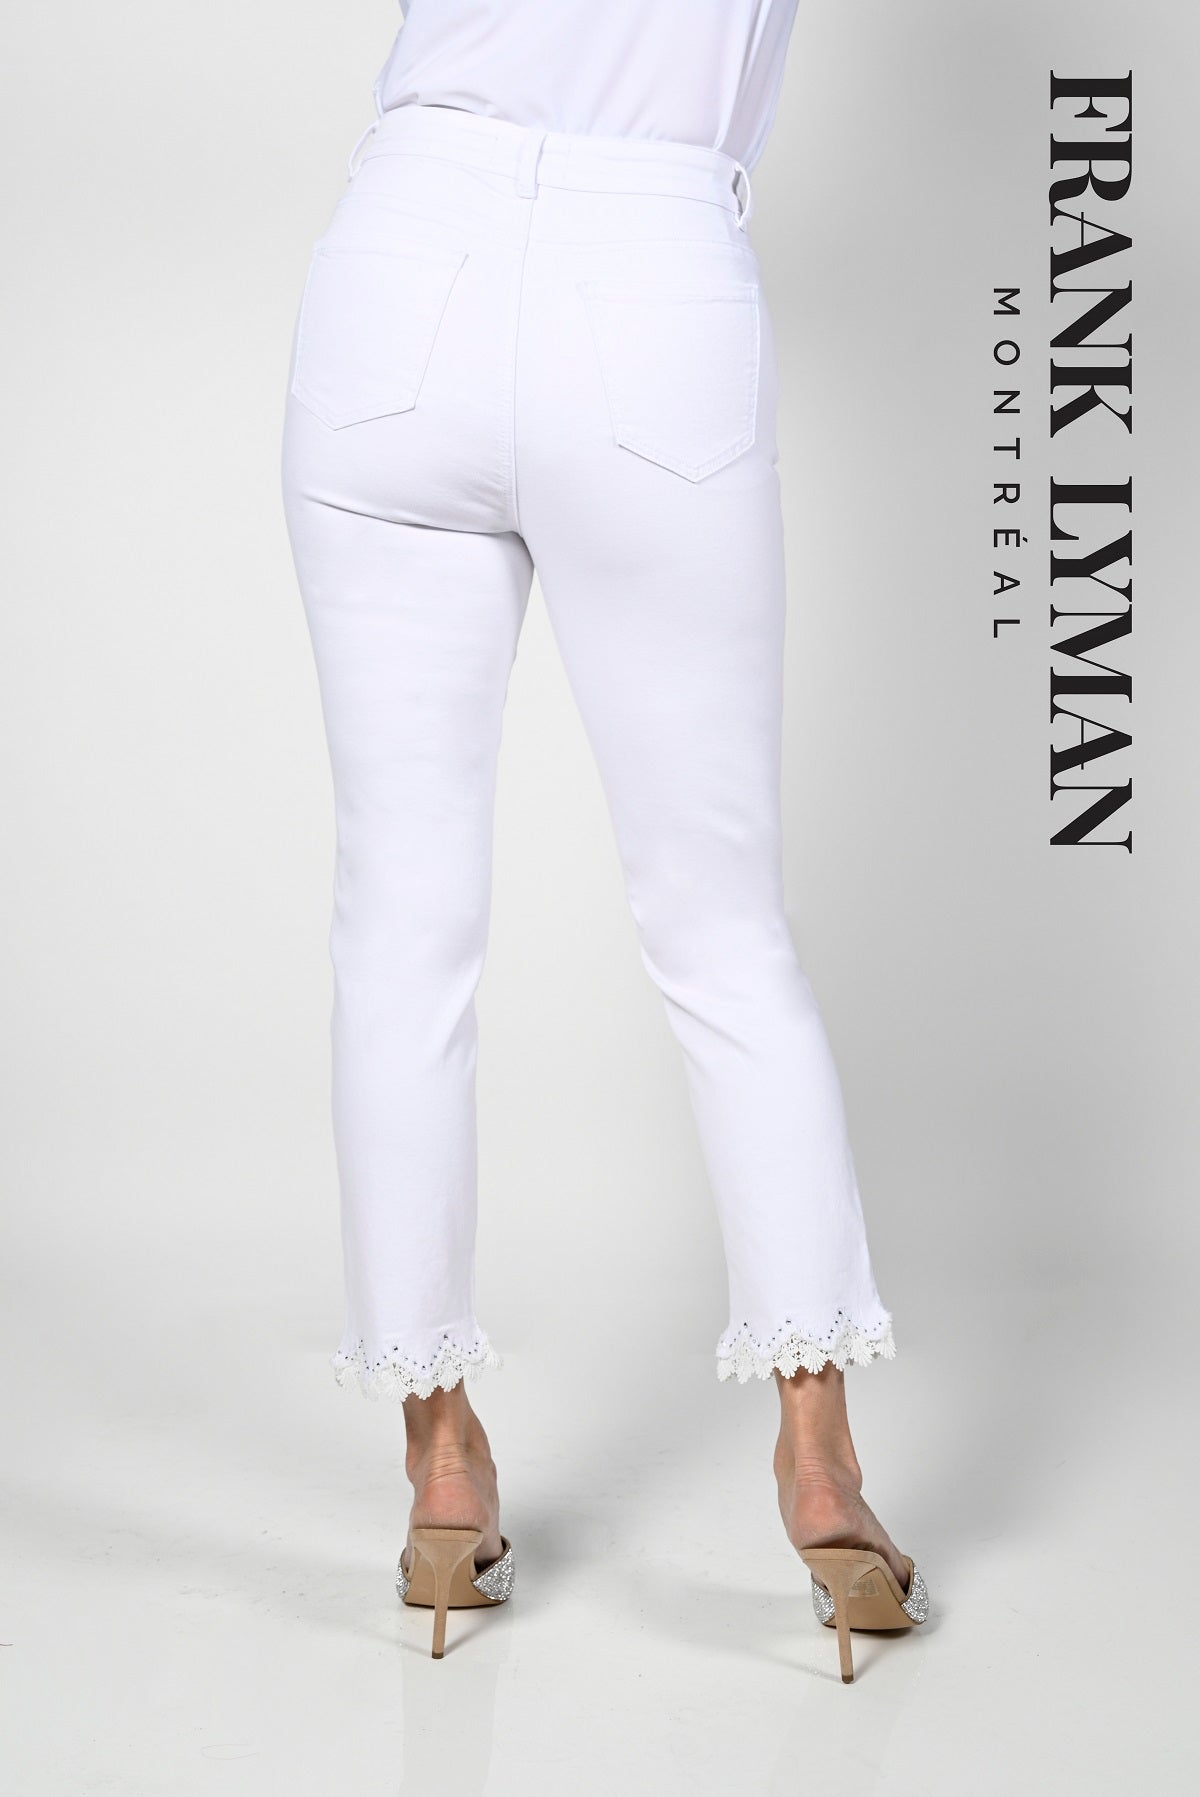 Frank Lyman Montreal White Jeans-Buy Frank Lyman Montreal Jeans Online-Frank Lyman Montreal Online Denim Shop-Women's Jeans-Women's Jeans Online Canada